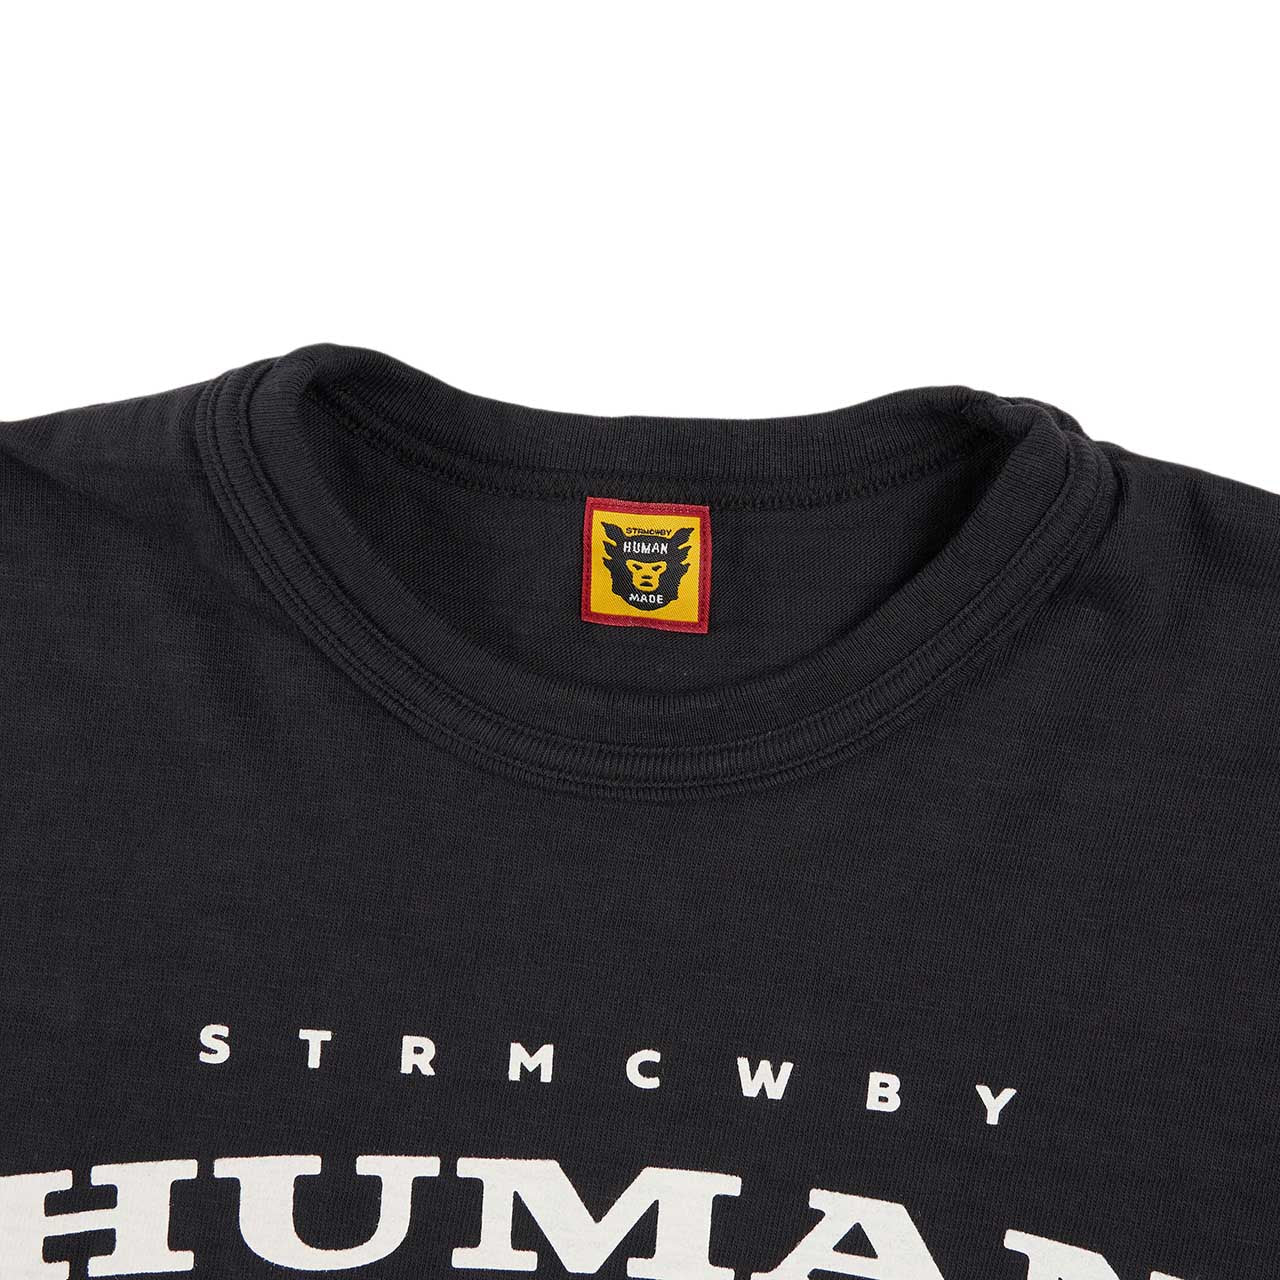 human made graphic t-shirt #12 (schwarz)